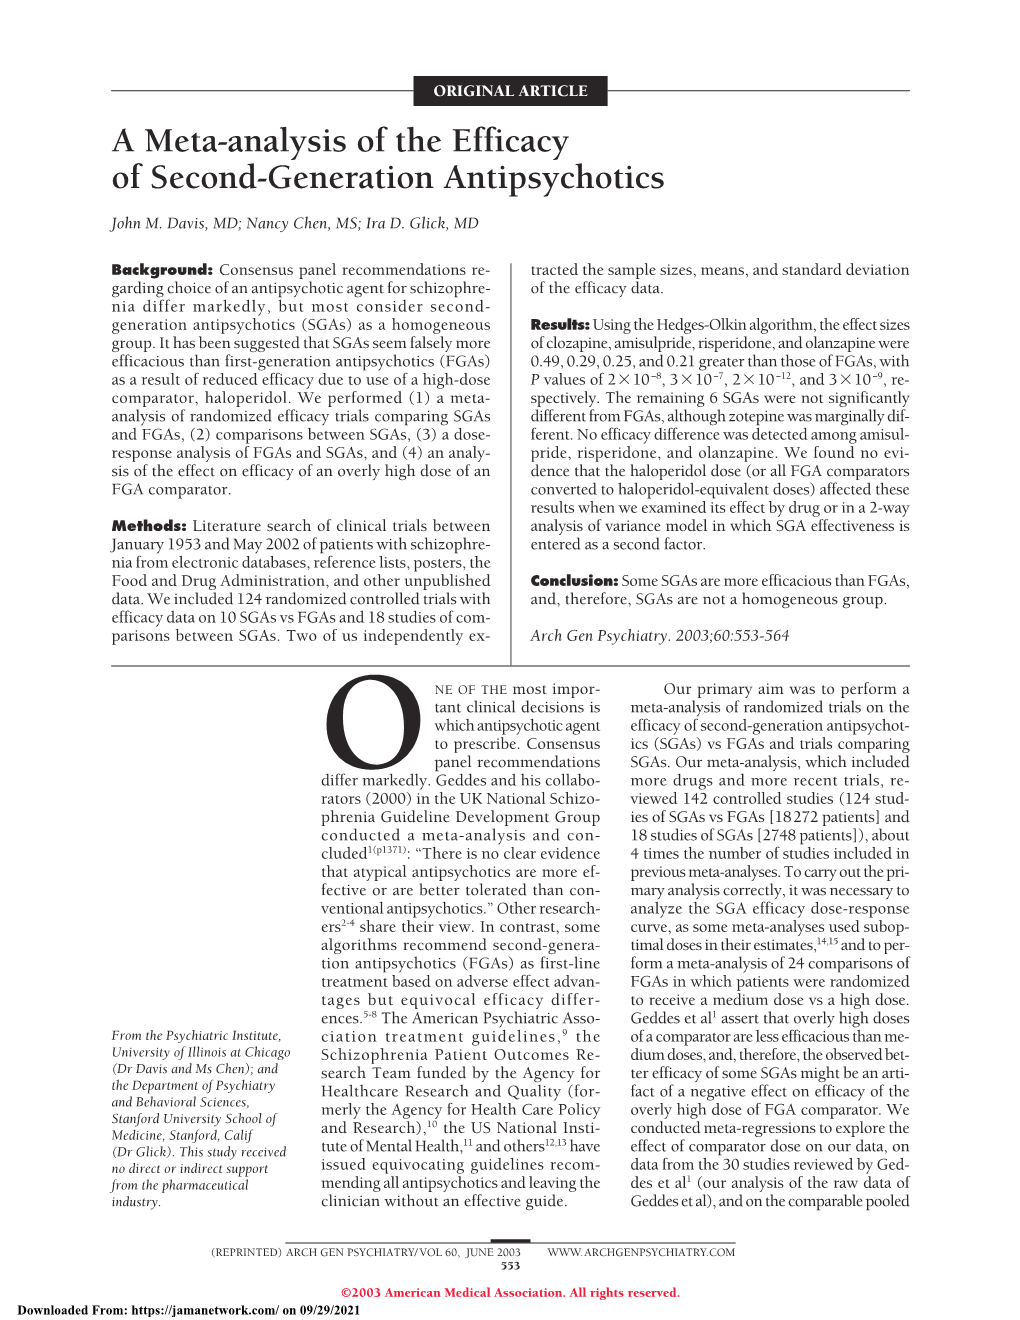 A Meta-Analysis of the Efficacy of Second-Generation Antipsychotics